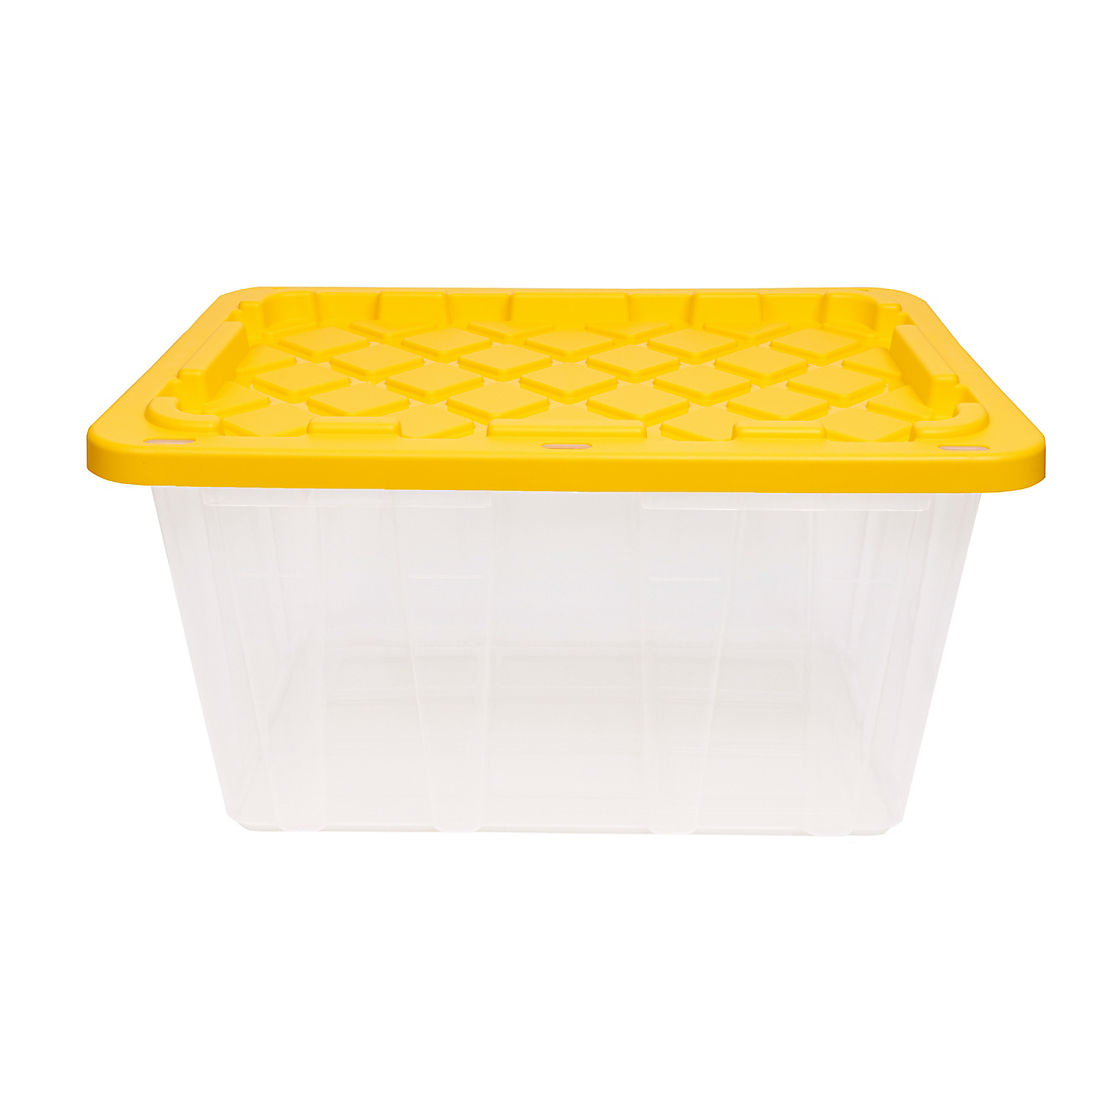 Ramtuf 27 Gallon Strong Box, Clear/Yellow